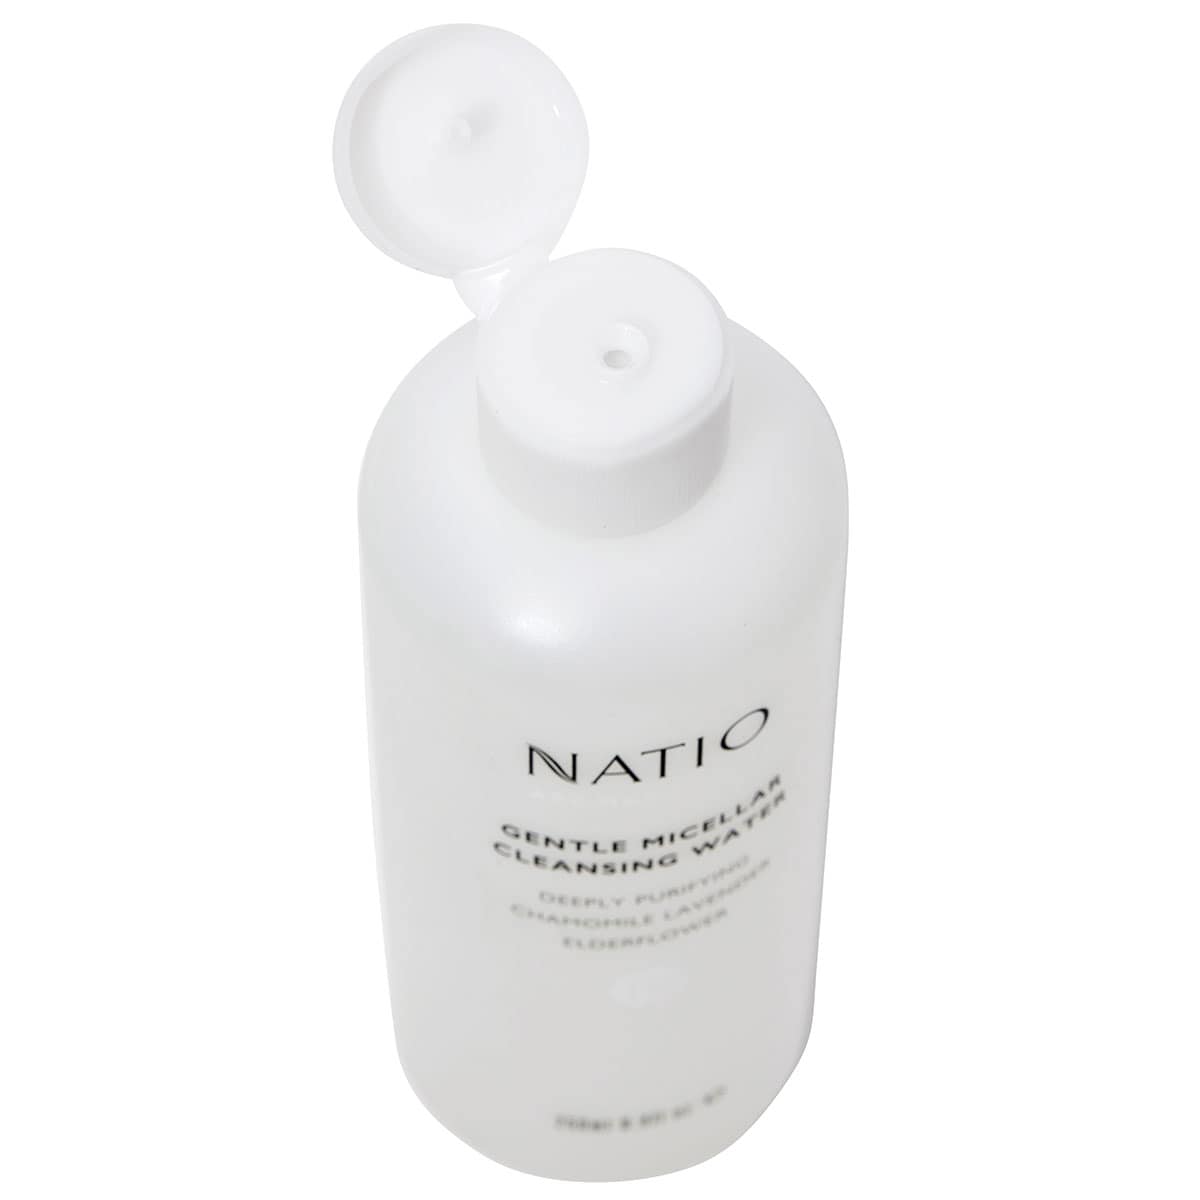 Natio Aromatherapy Gentle Micellar Cleansing Water 250ml